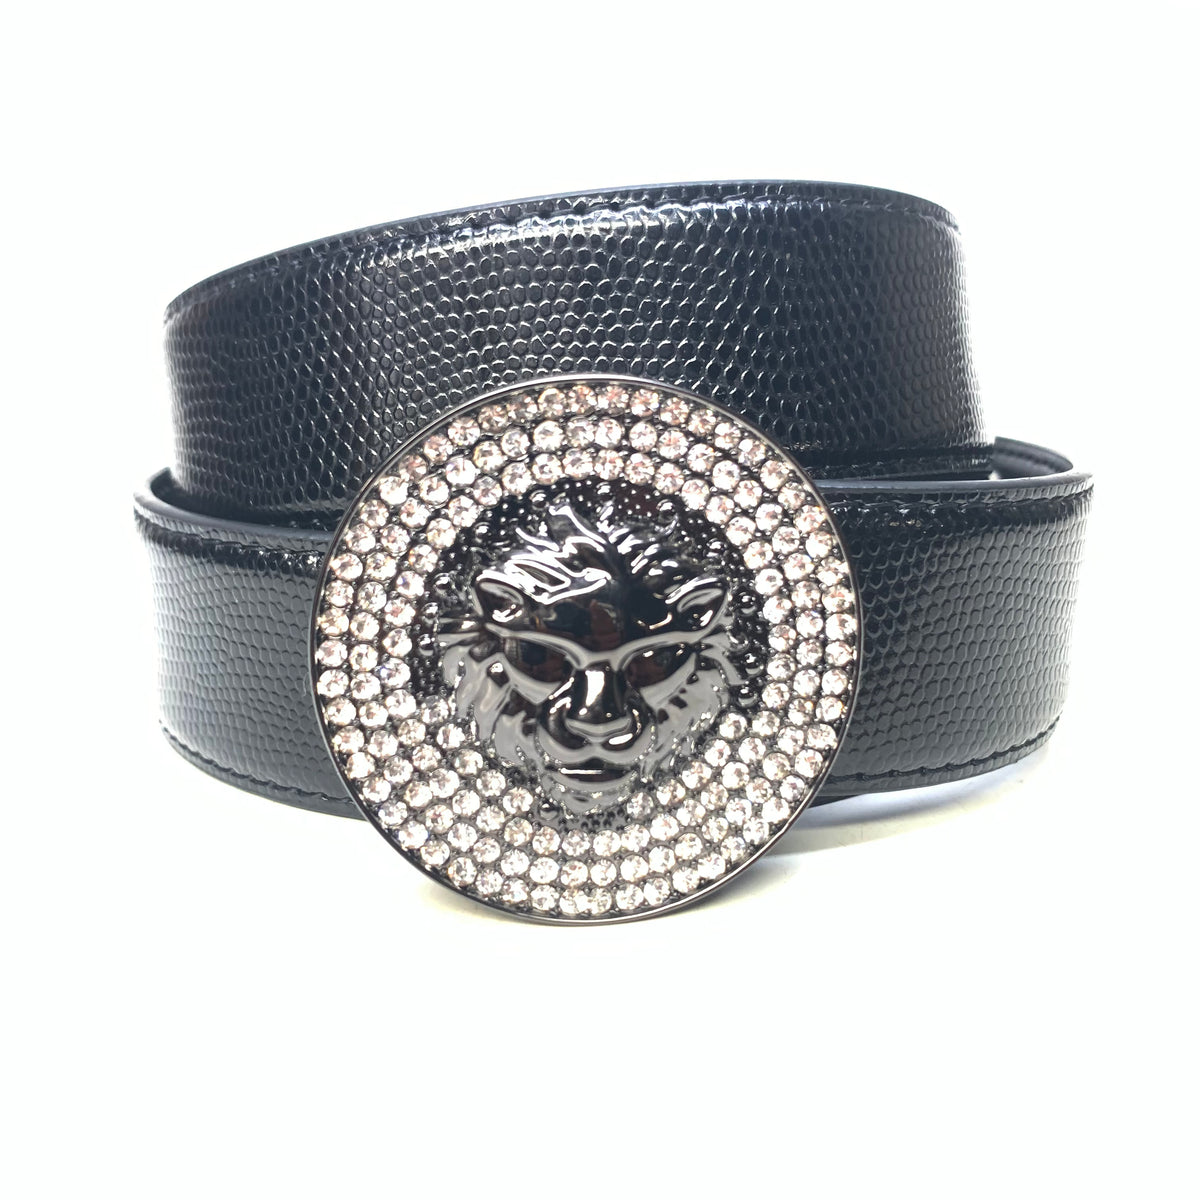 Barabas "Lion Guard" Shiny Black/Black Snake Adjustable Luxury Leather Dress Belt - Dudes Boutique